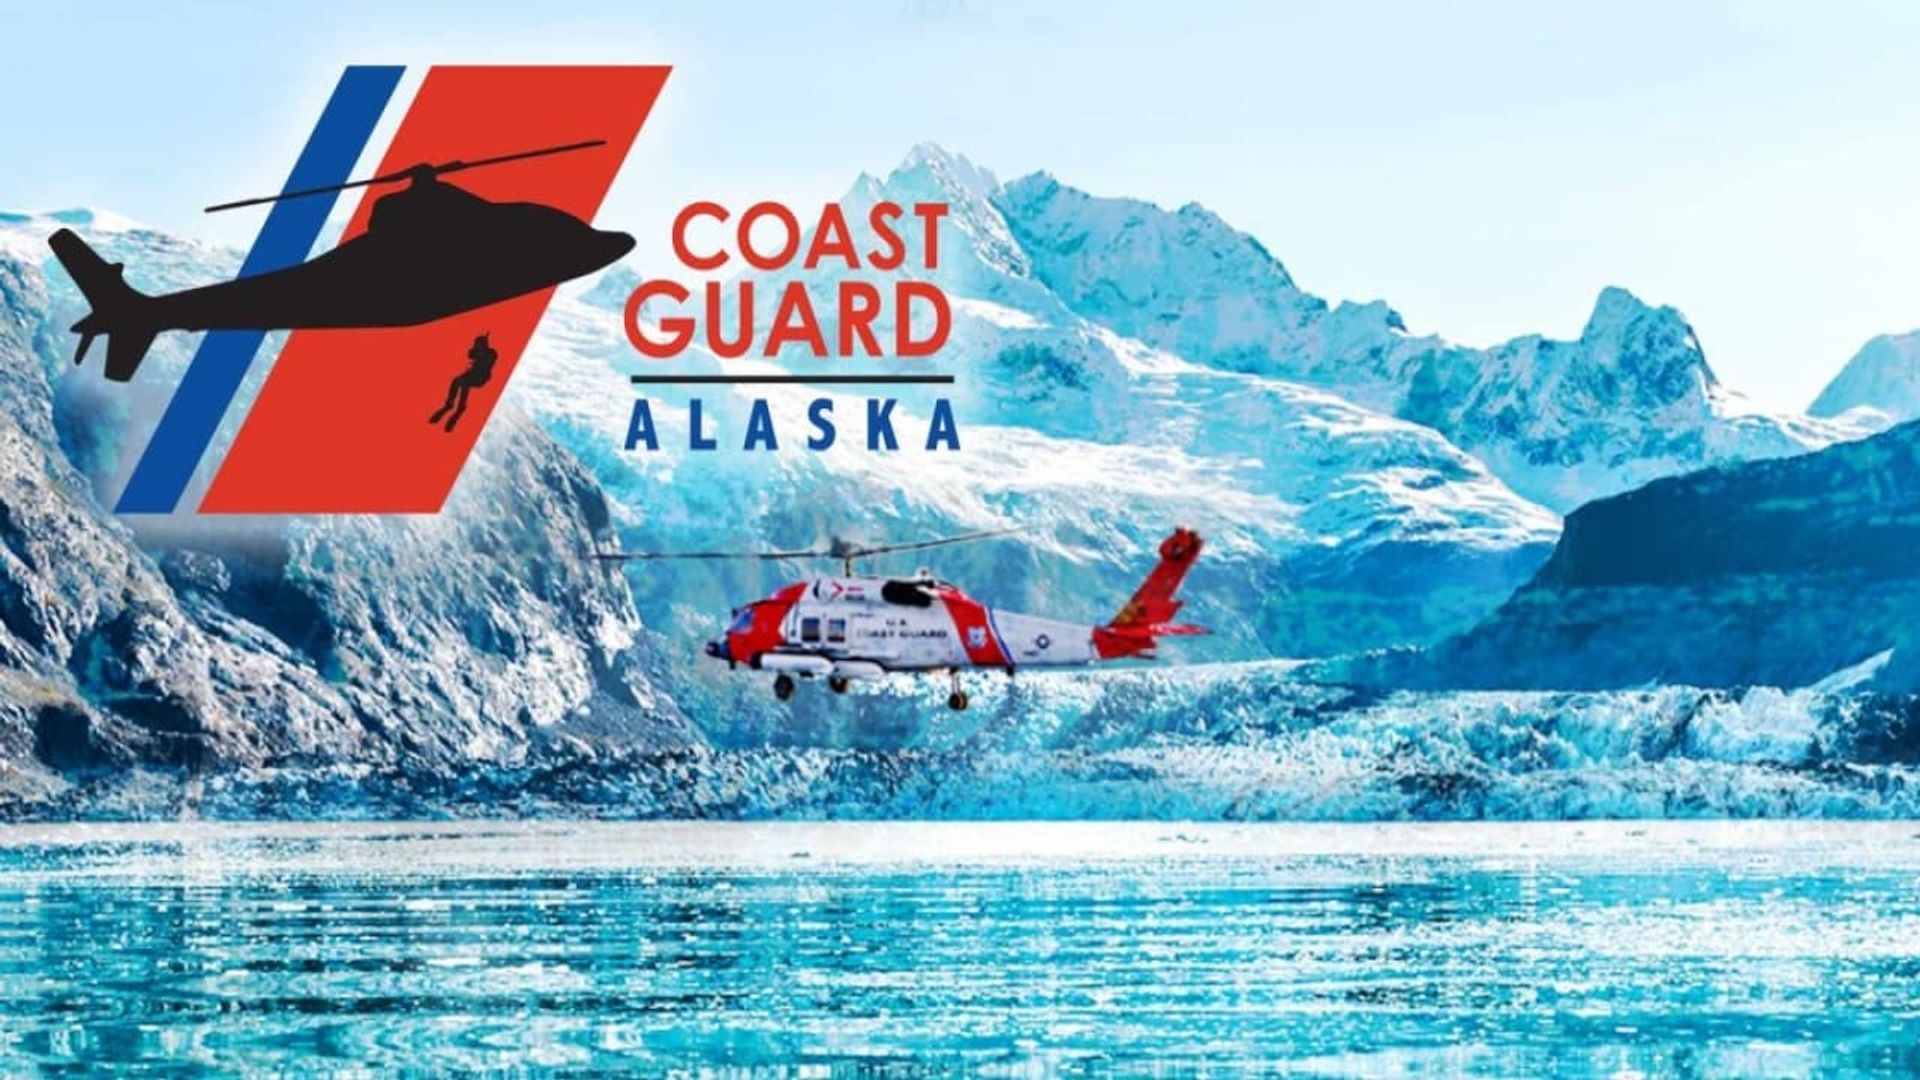 Coast Guard Alaska background